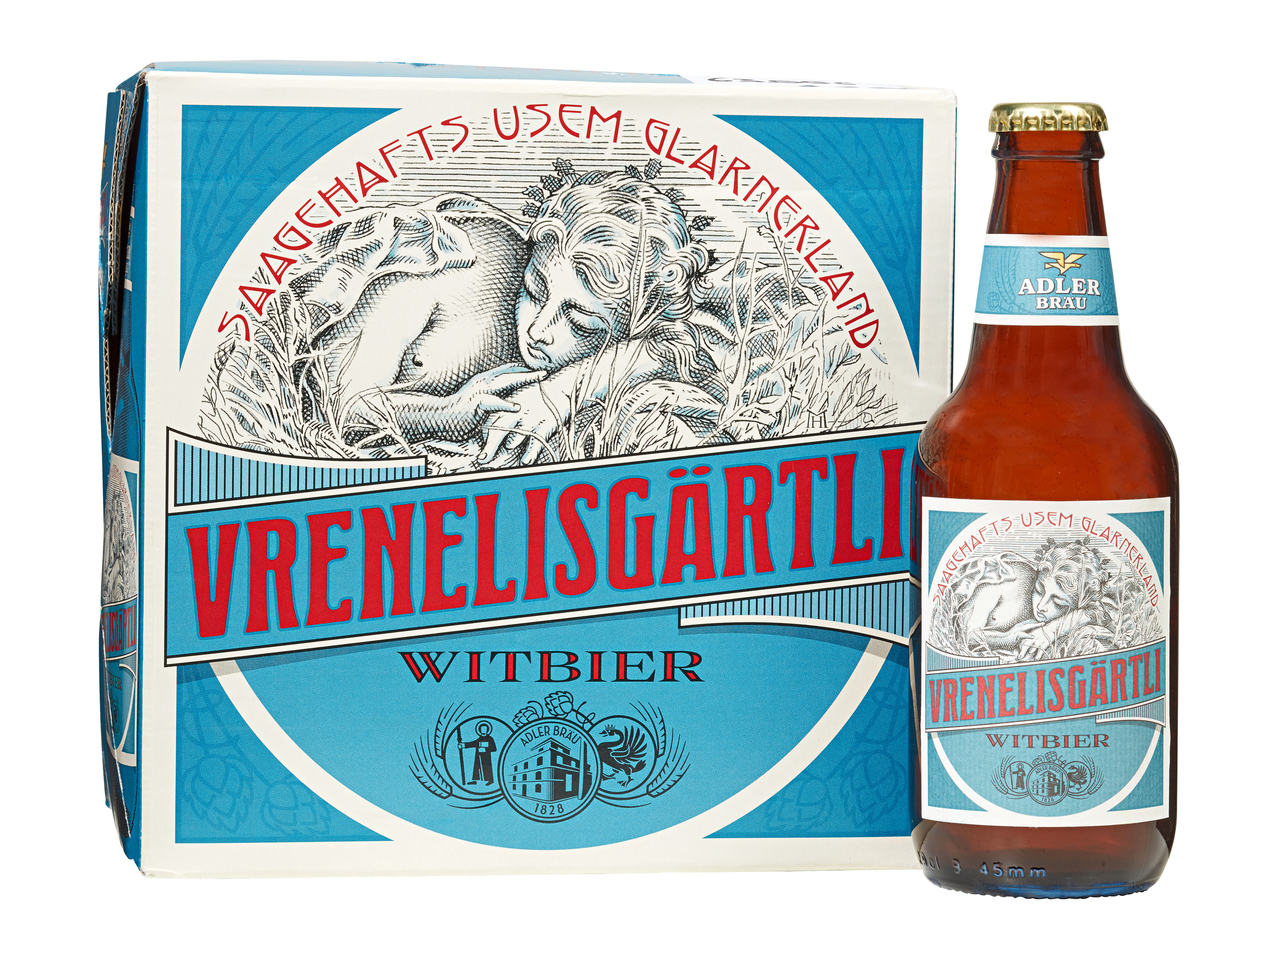 Bière blanche Vrenelisgärtli